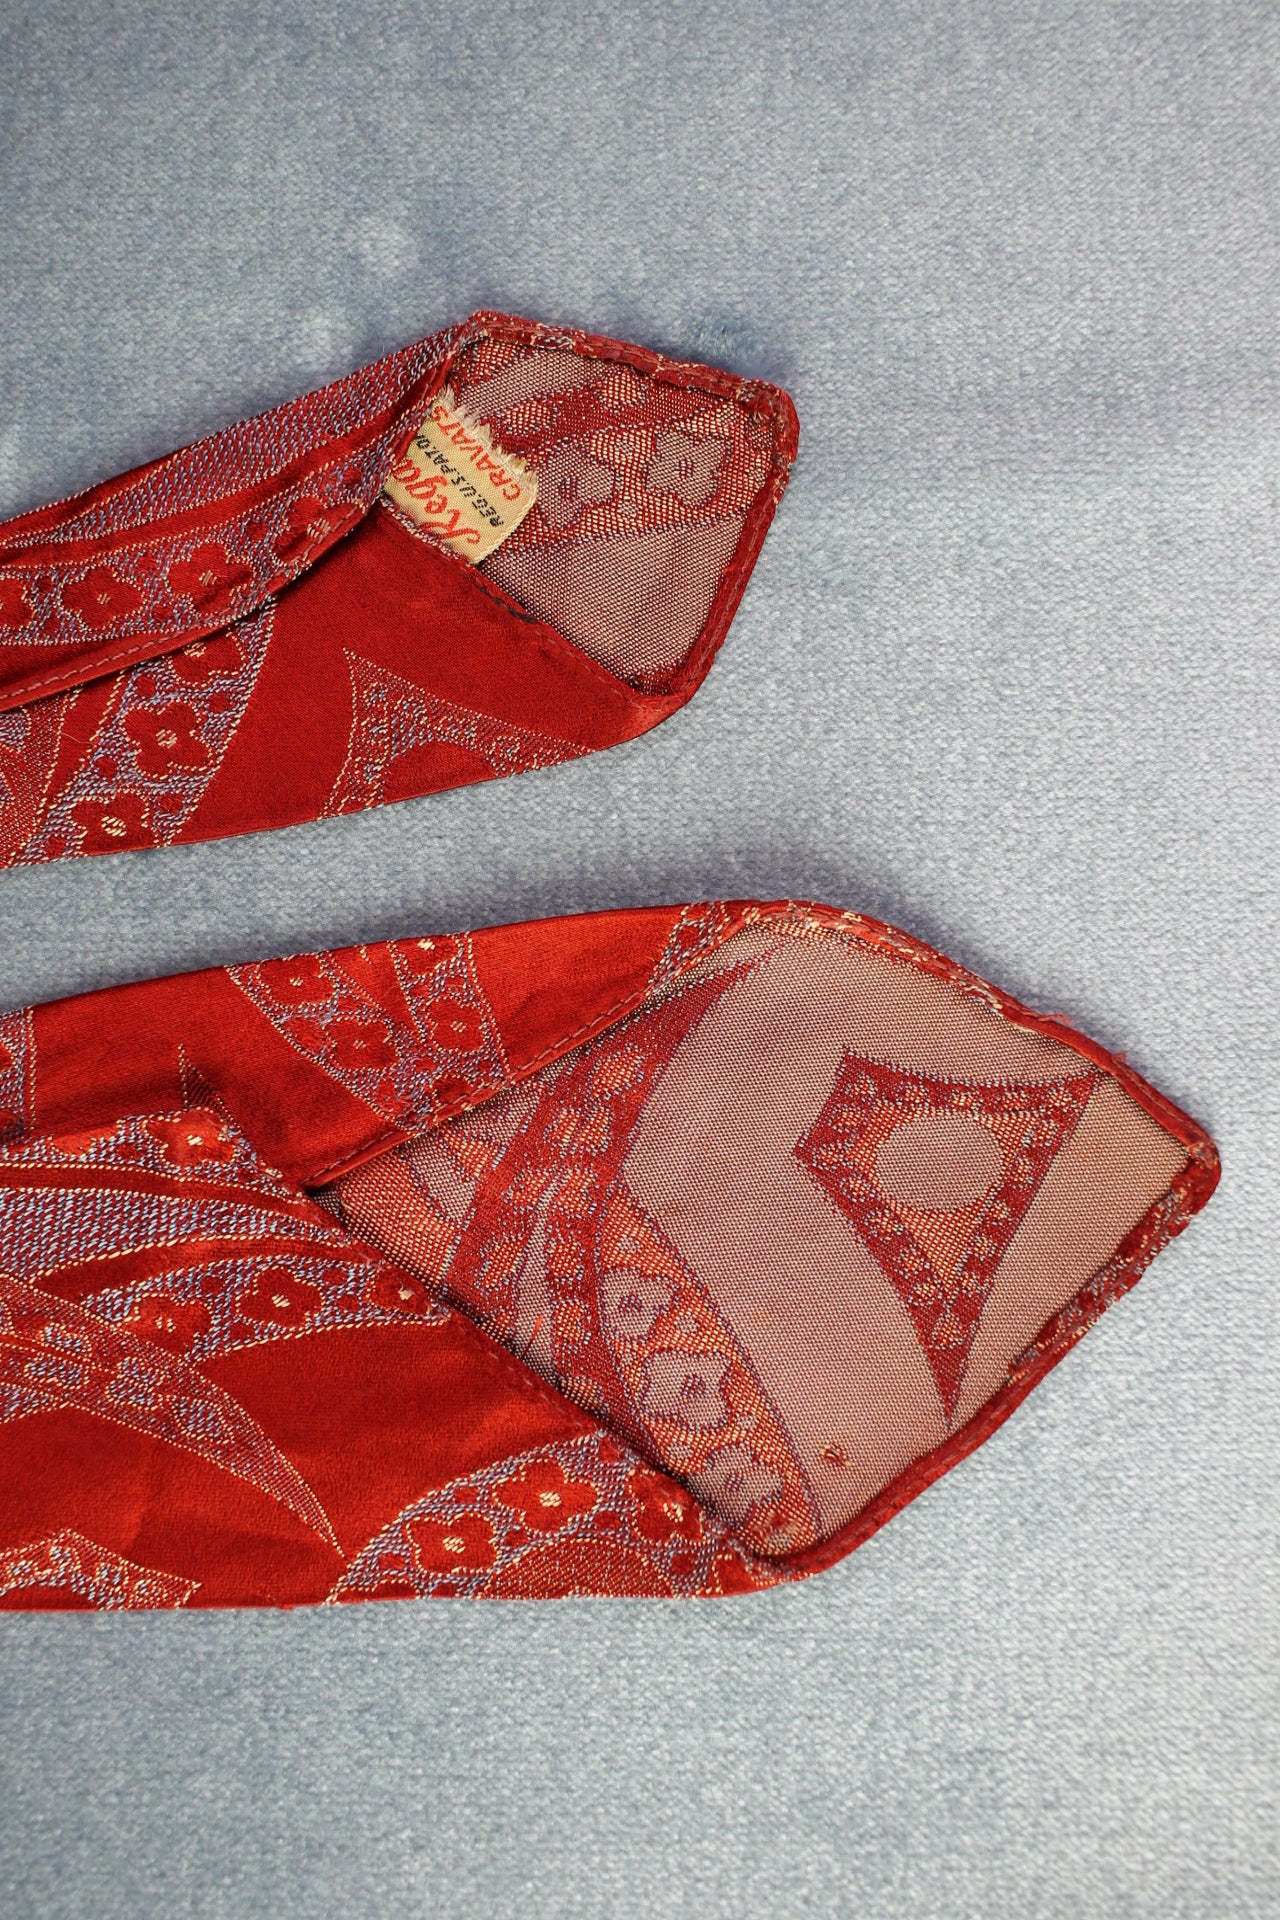 Vintage Regal bright red lilac pattern swing tie